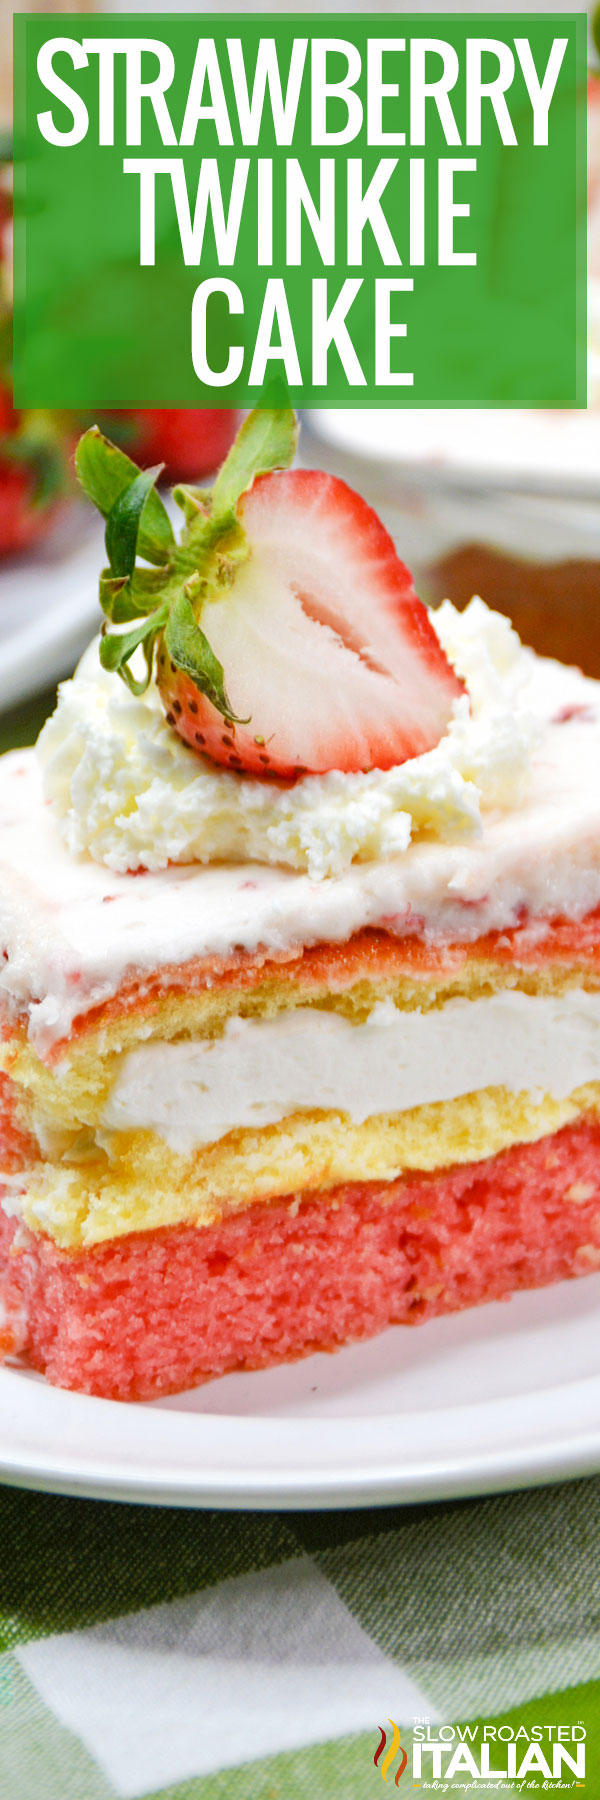 strawberry twinkie cake - pin